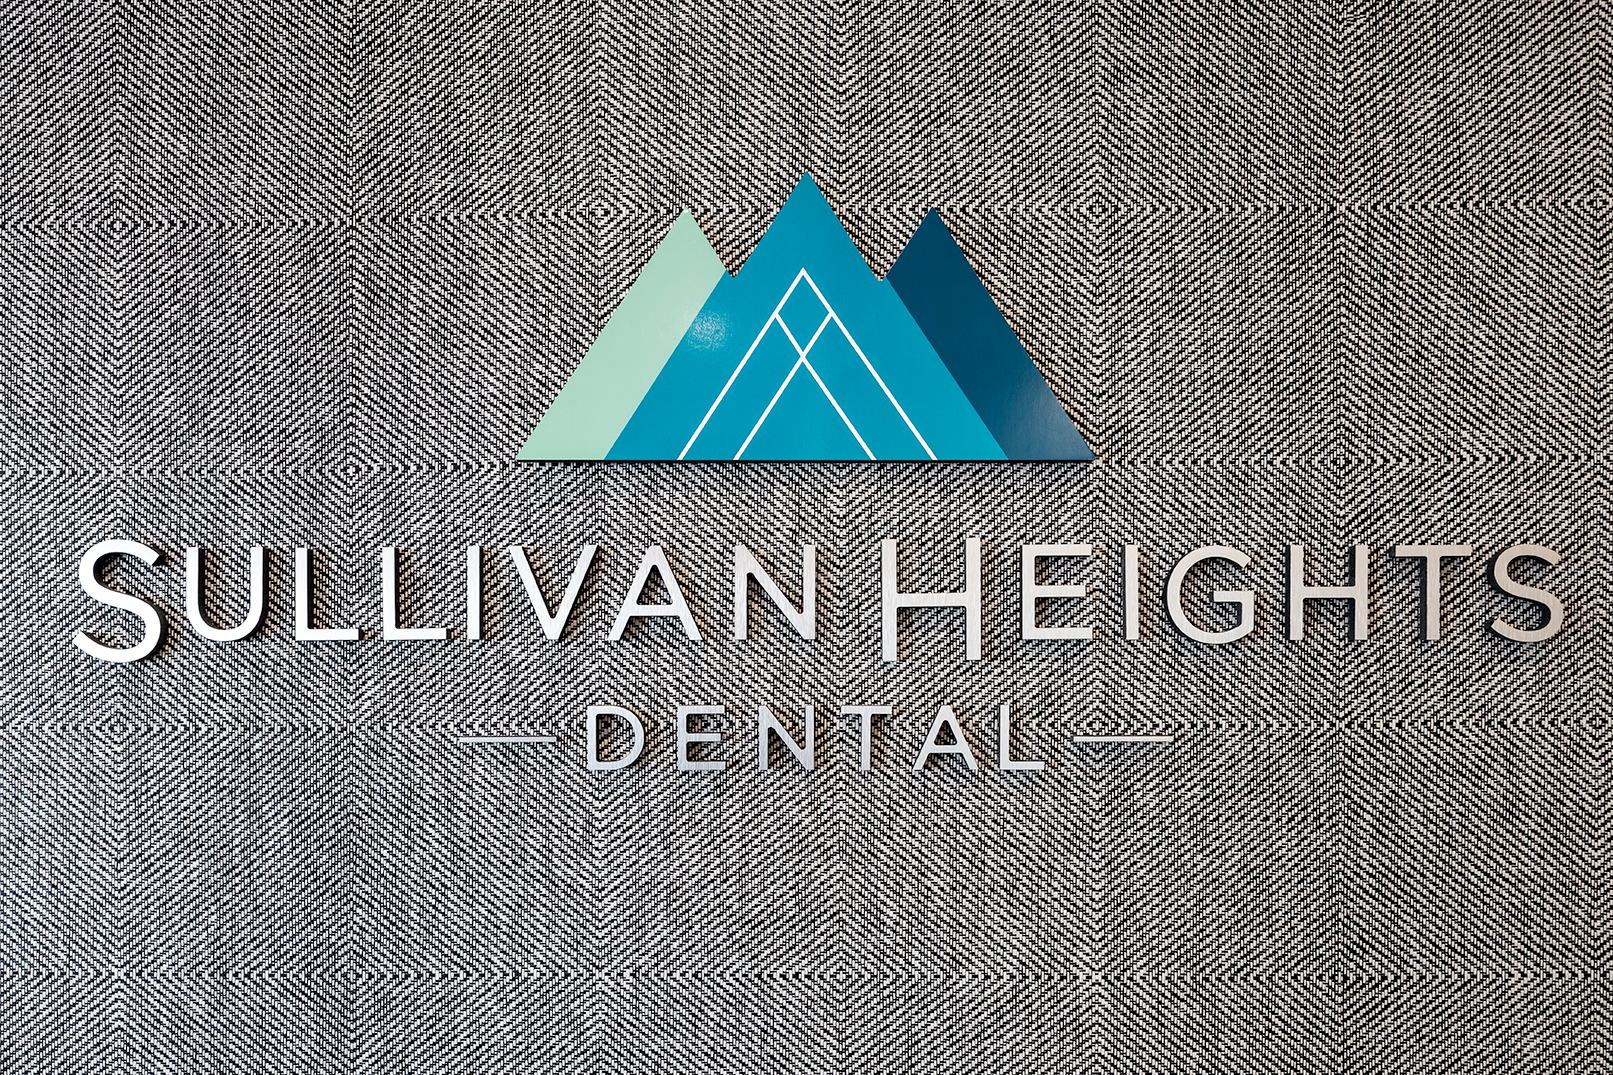 Arborlea Developments - Sullivan Heights Dental